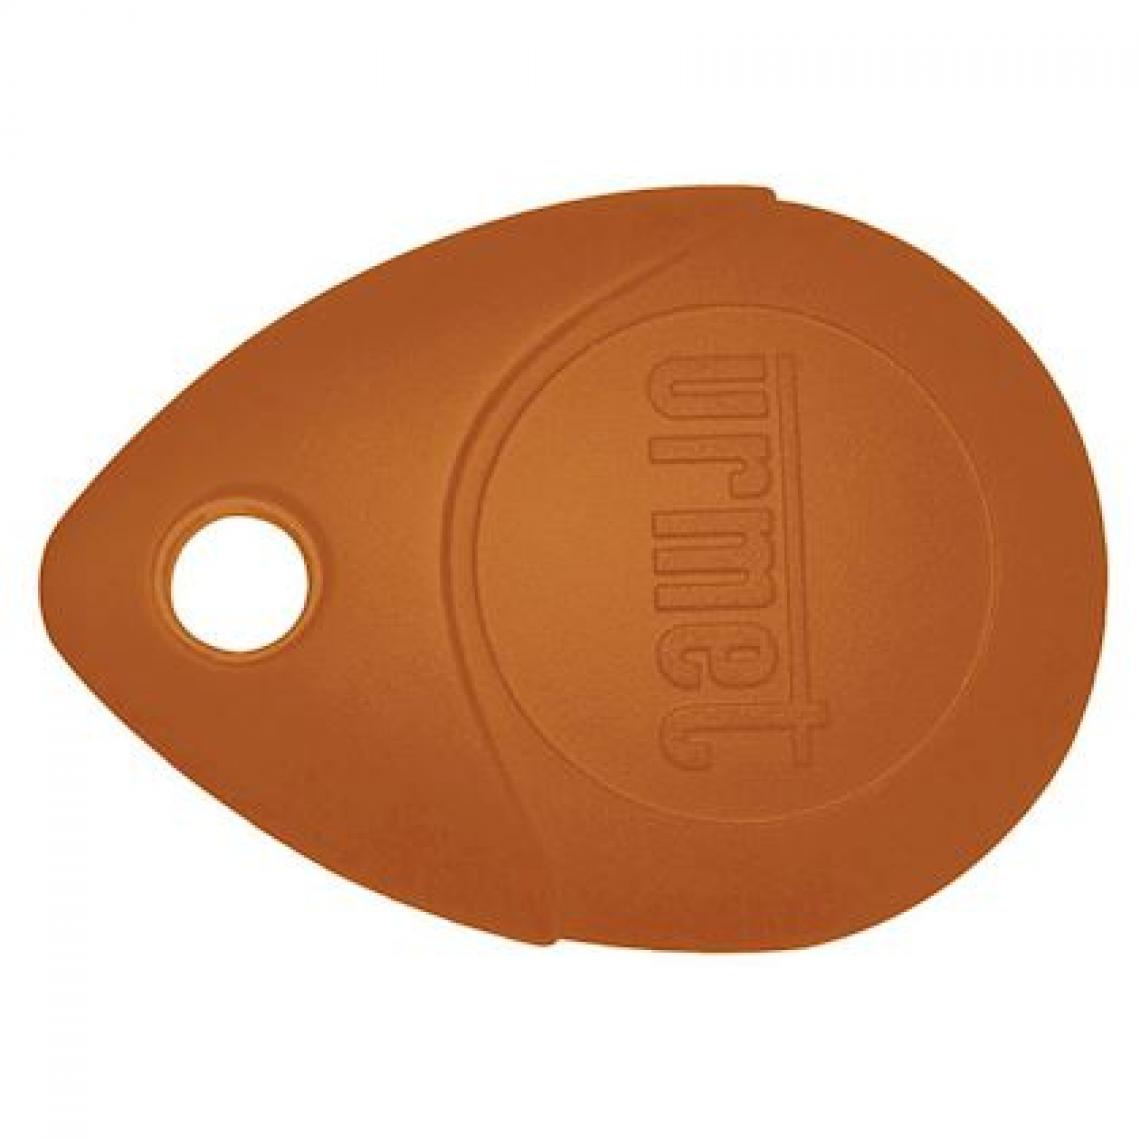 Urmet - badge / clé de proximité - 13.56 - orange - urmet memoprox/o - Accessoires de motorisation